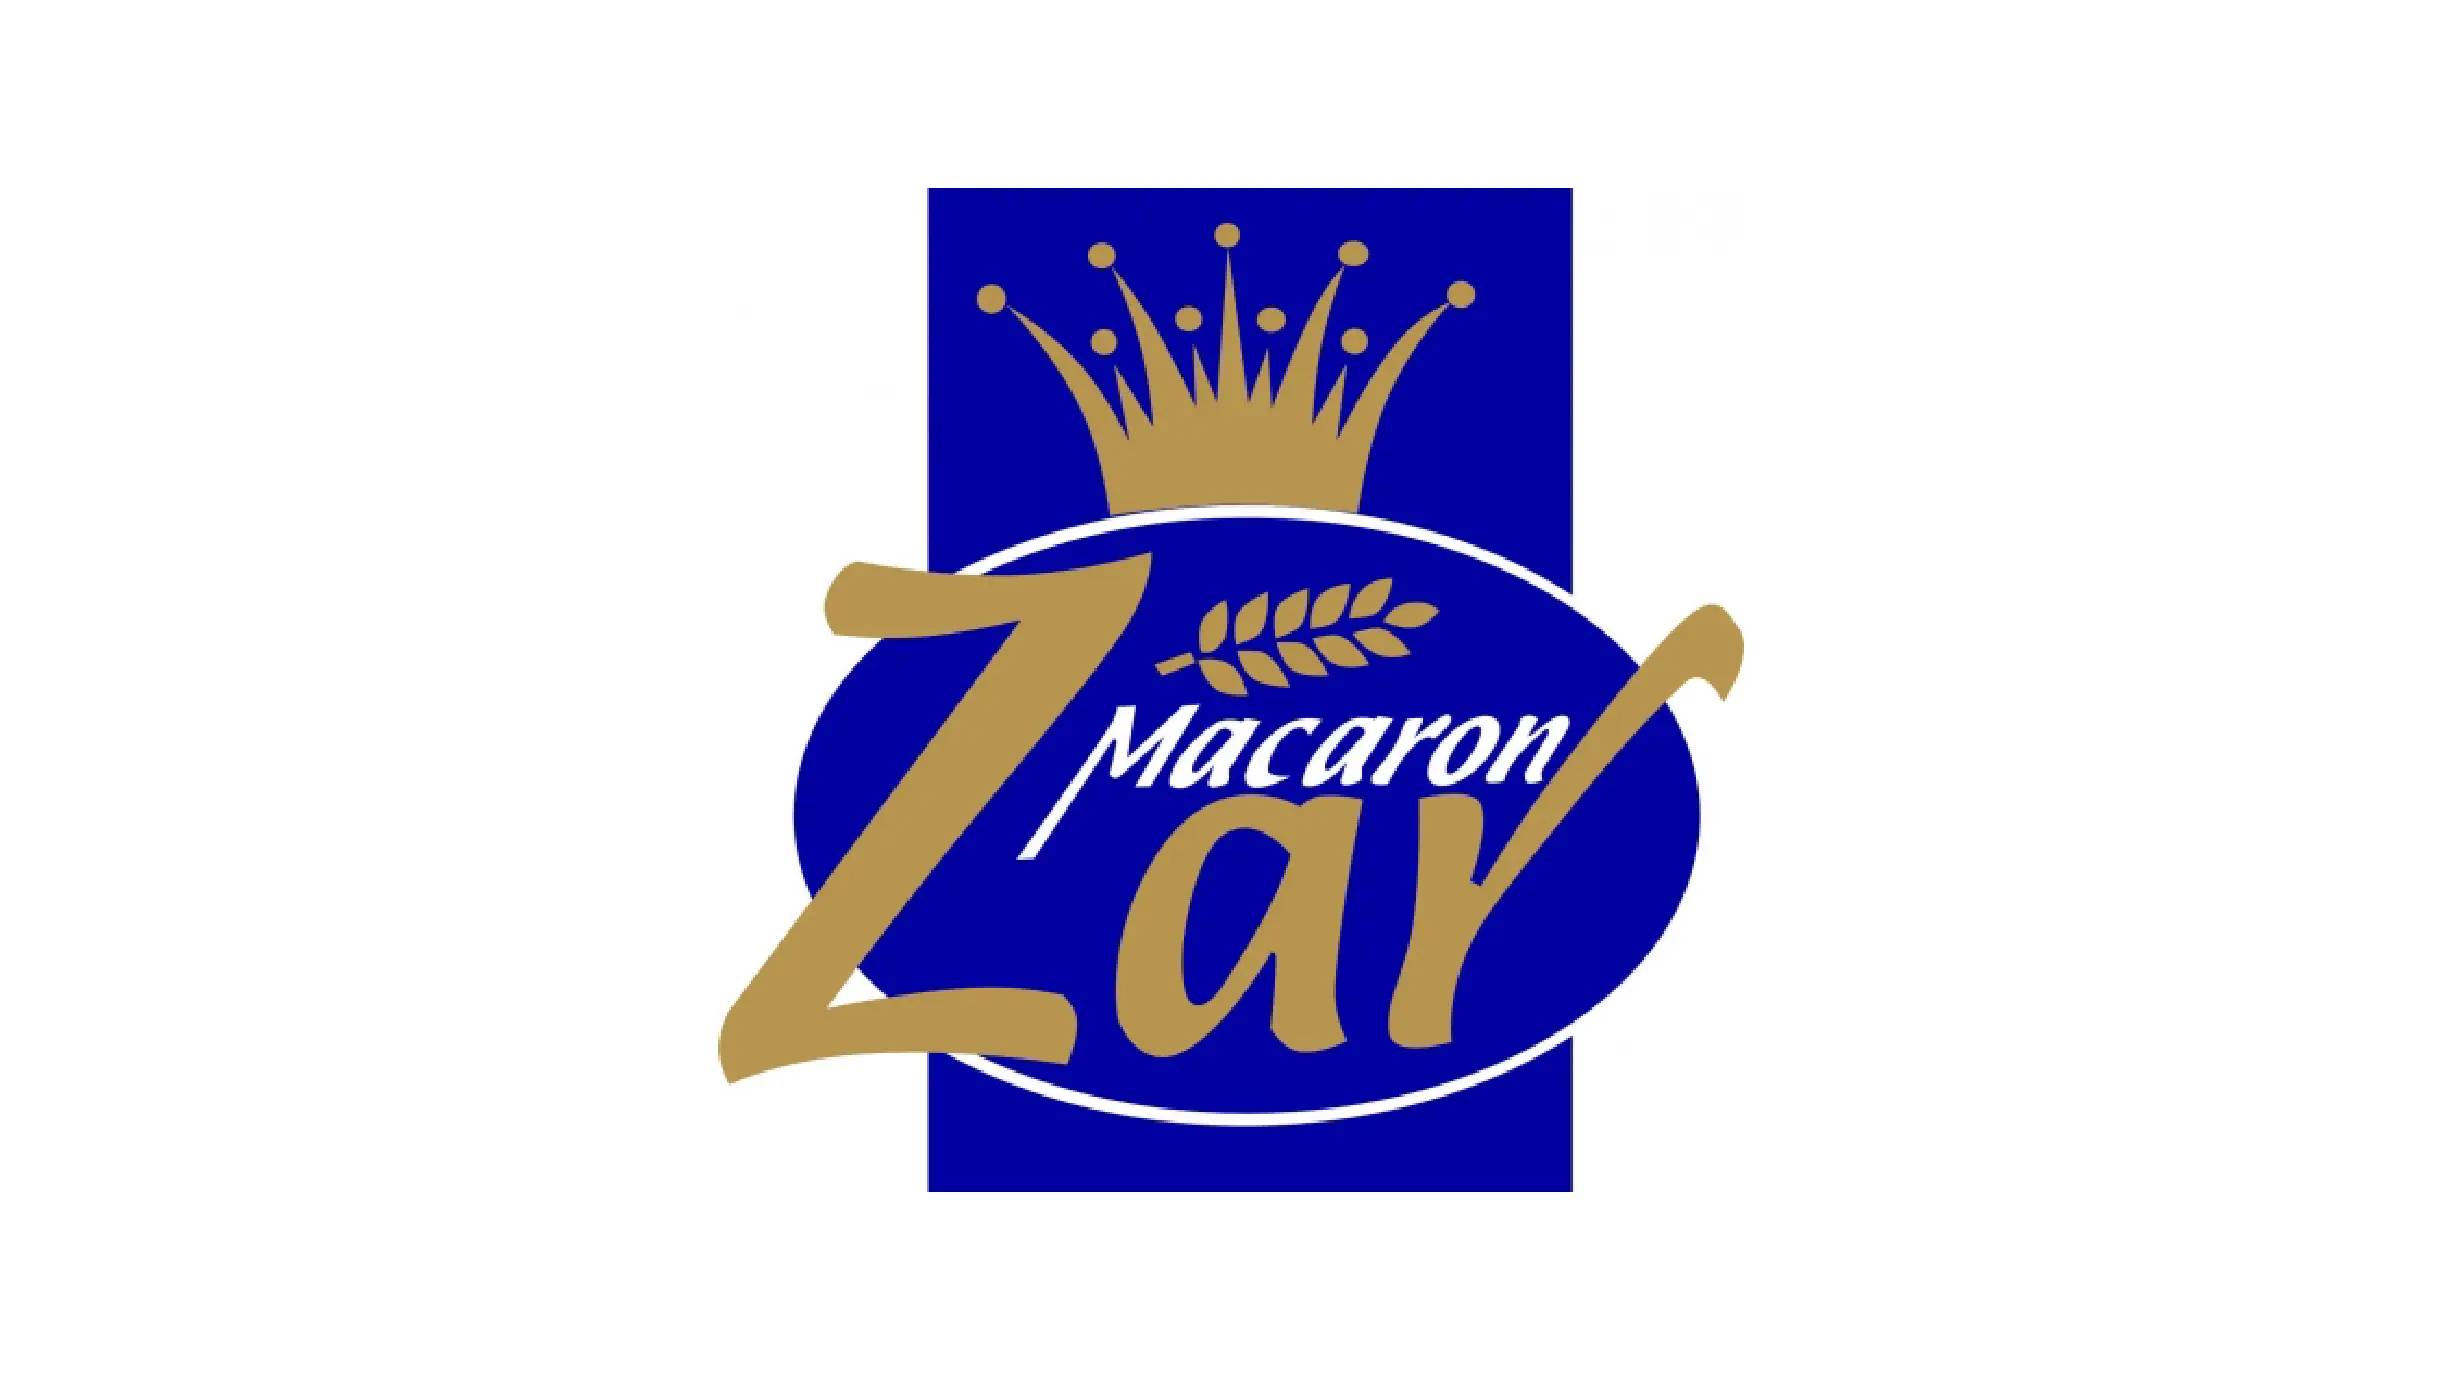 Zar Macaroni